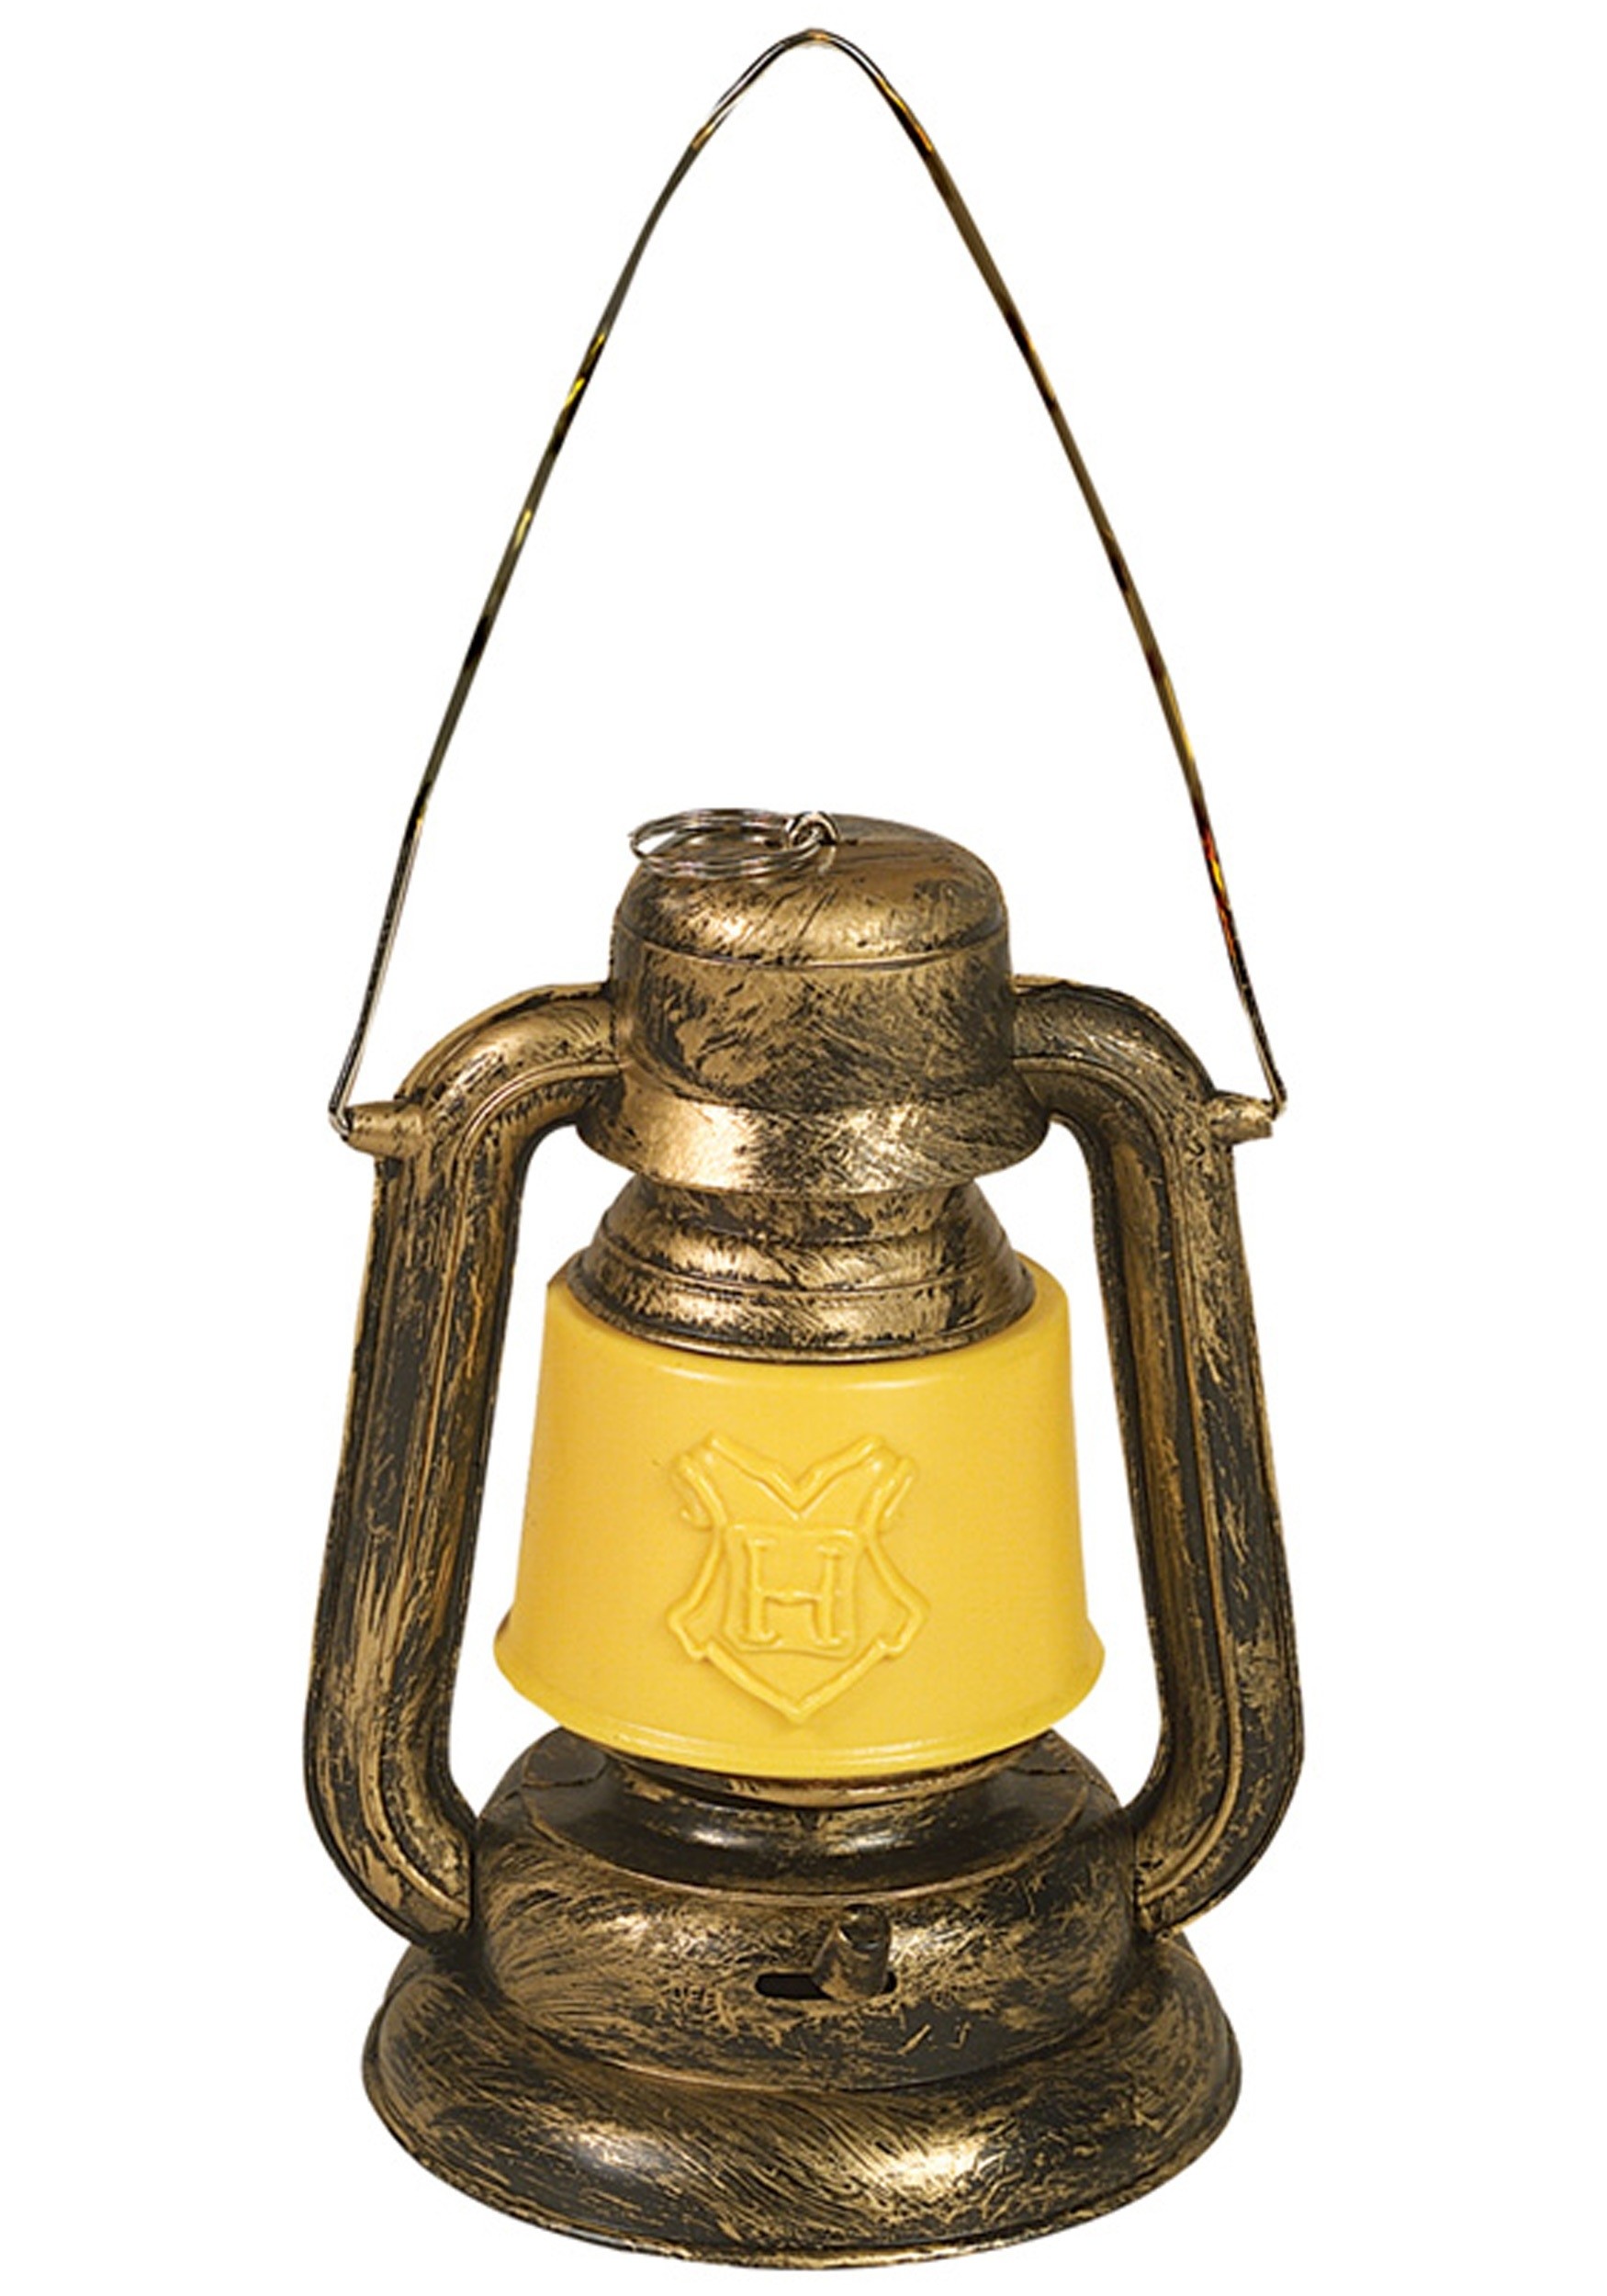 Harry potter lamps 10 reasons to buy warisan lighting 1